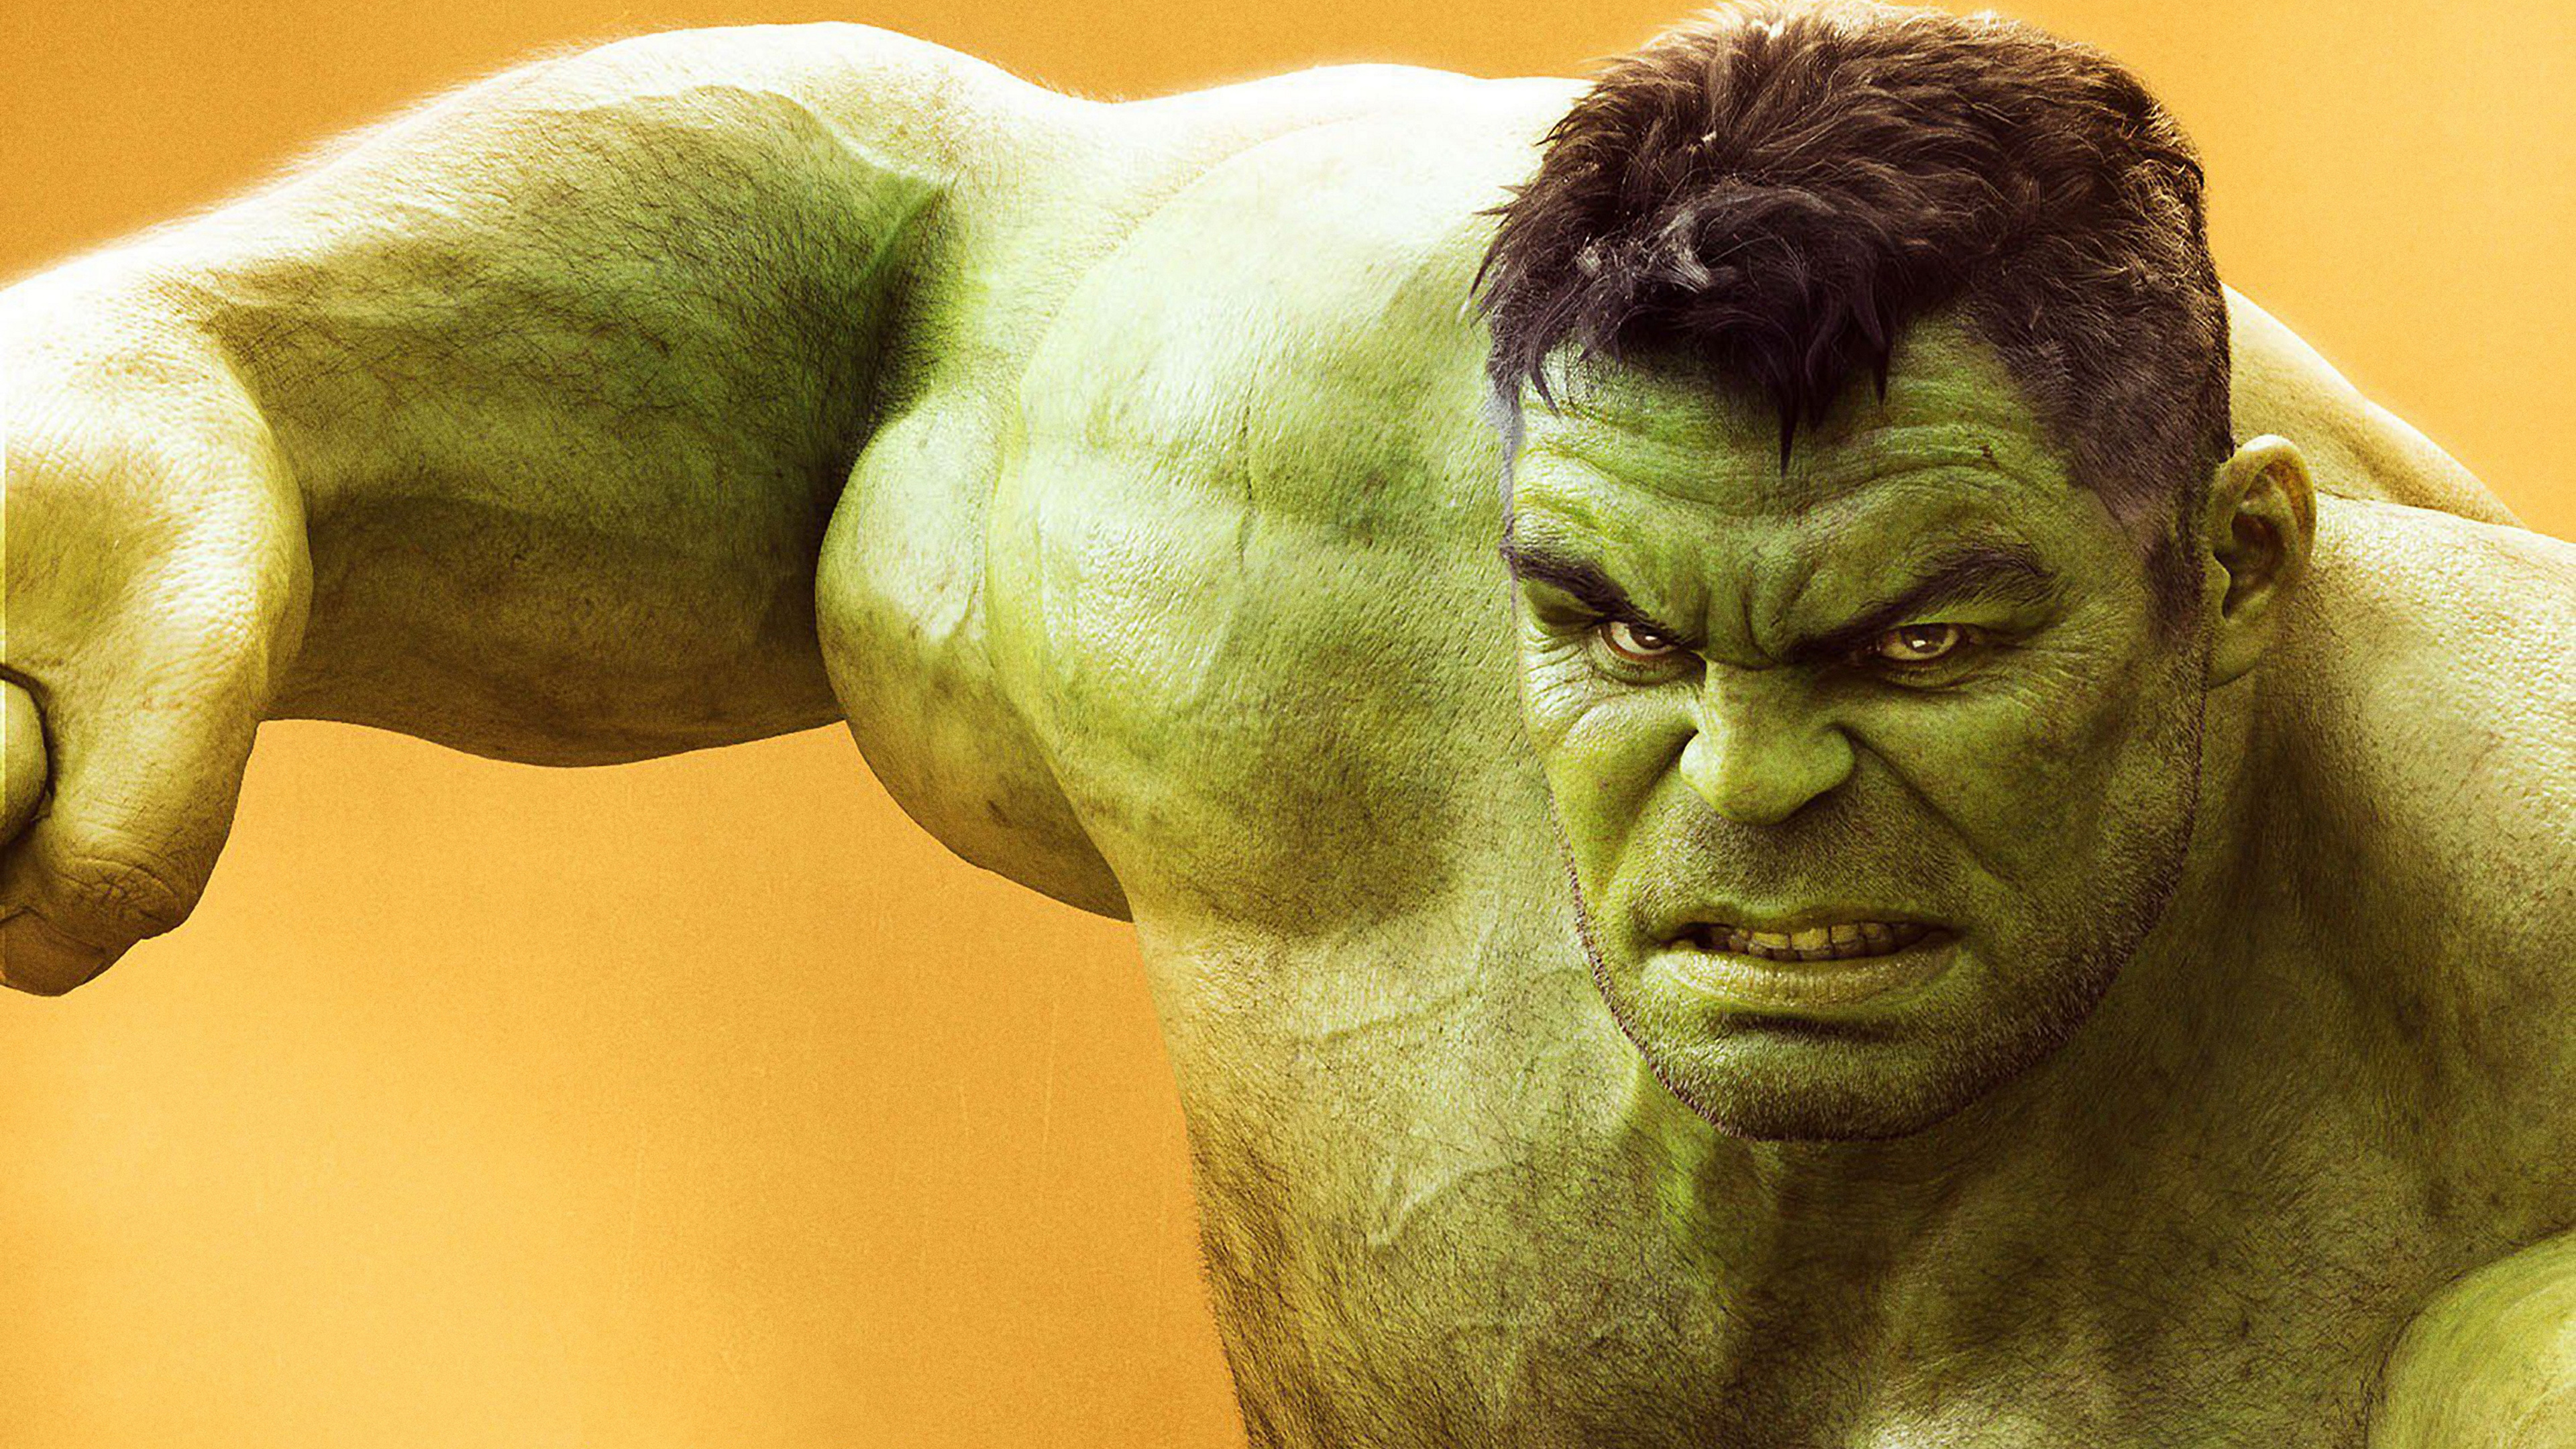 Hulk in Avengers Infinity War 4K Wallpapers | HD Wallpapers